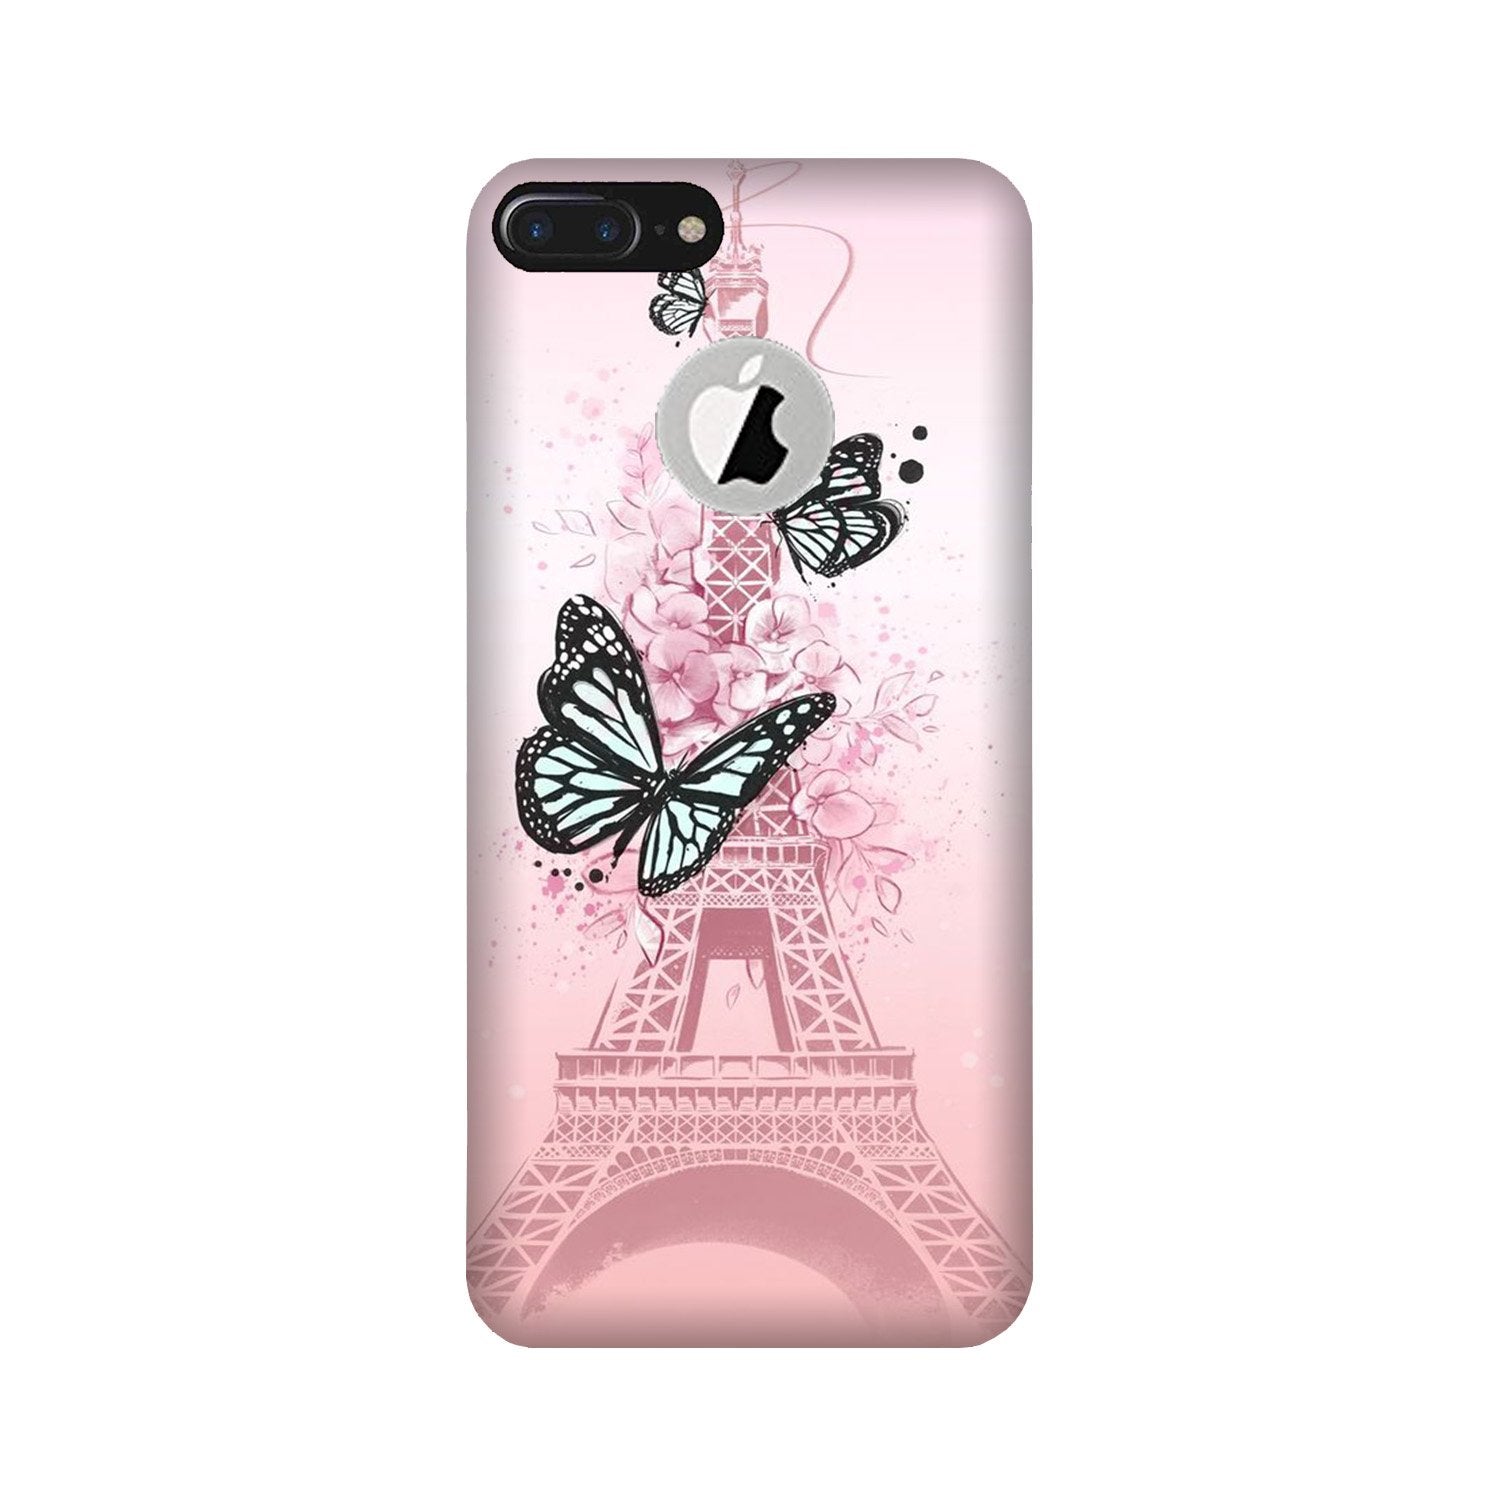 Eiffel Tower Case for iPhone 7 Plus logo cut (Design No. 211)